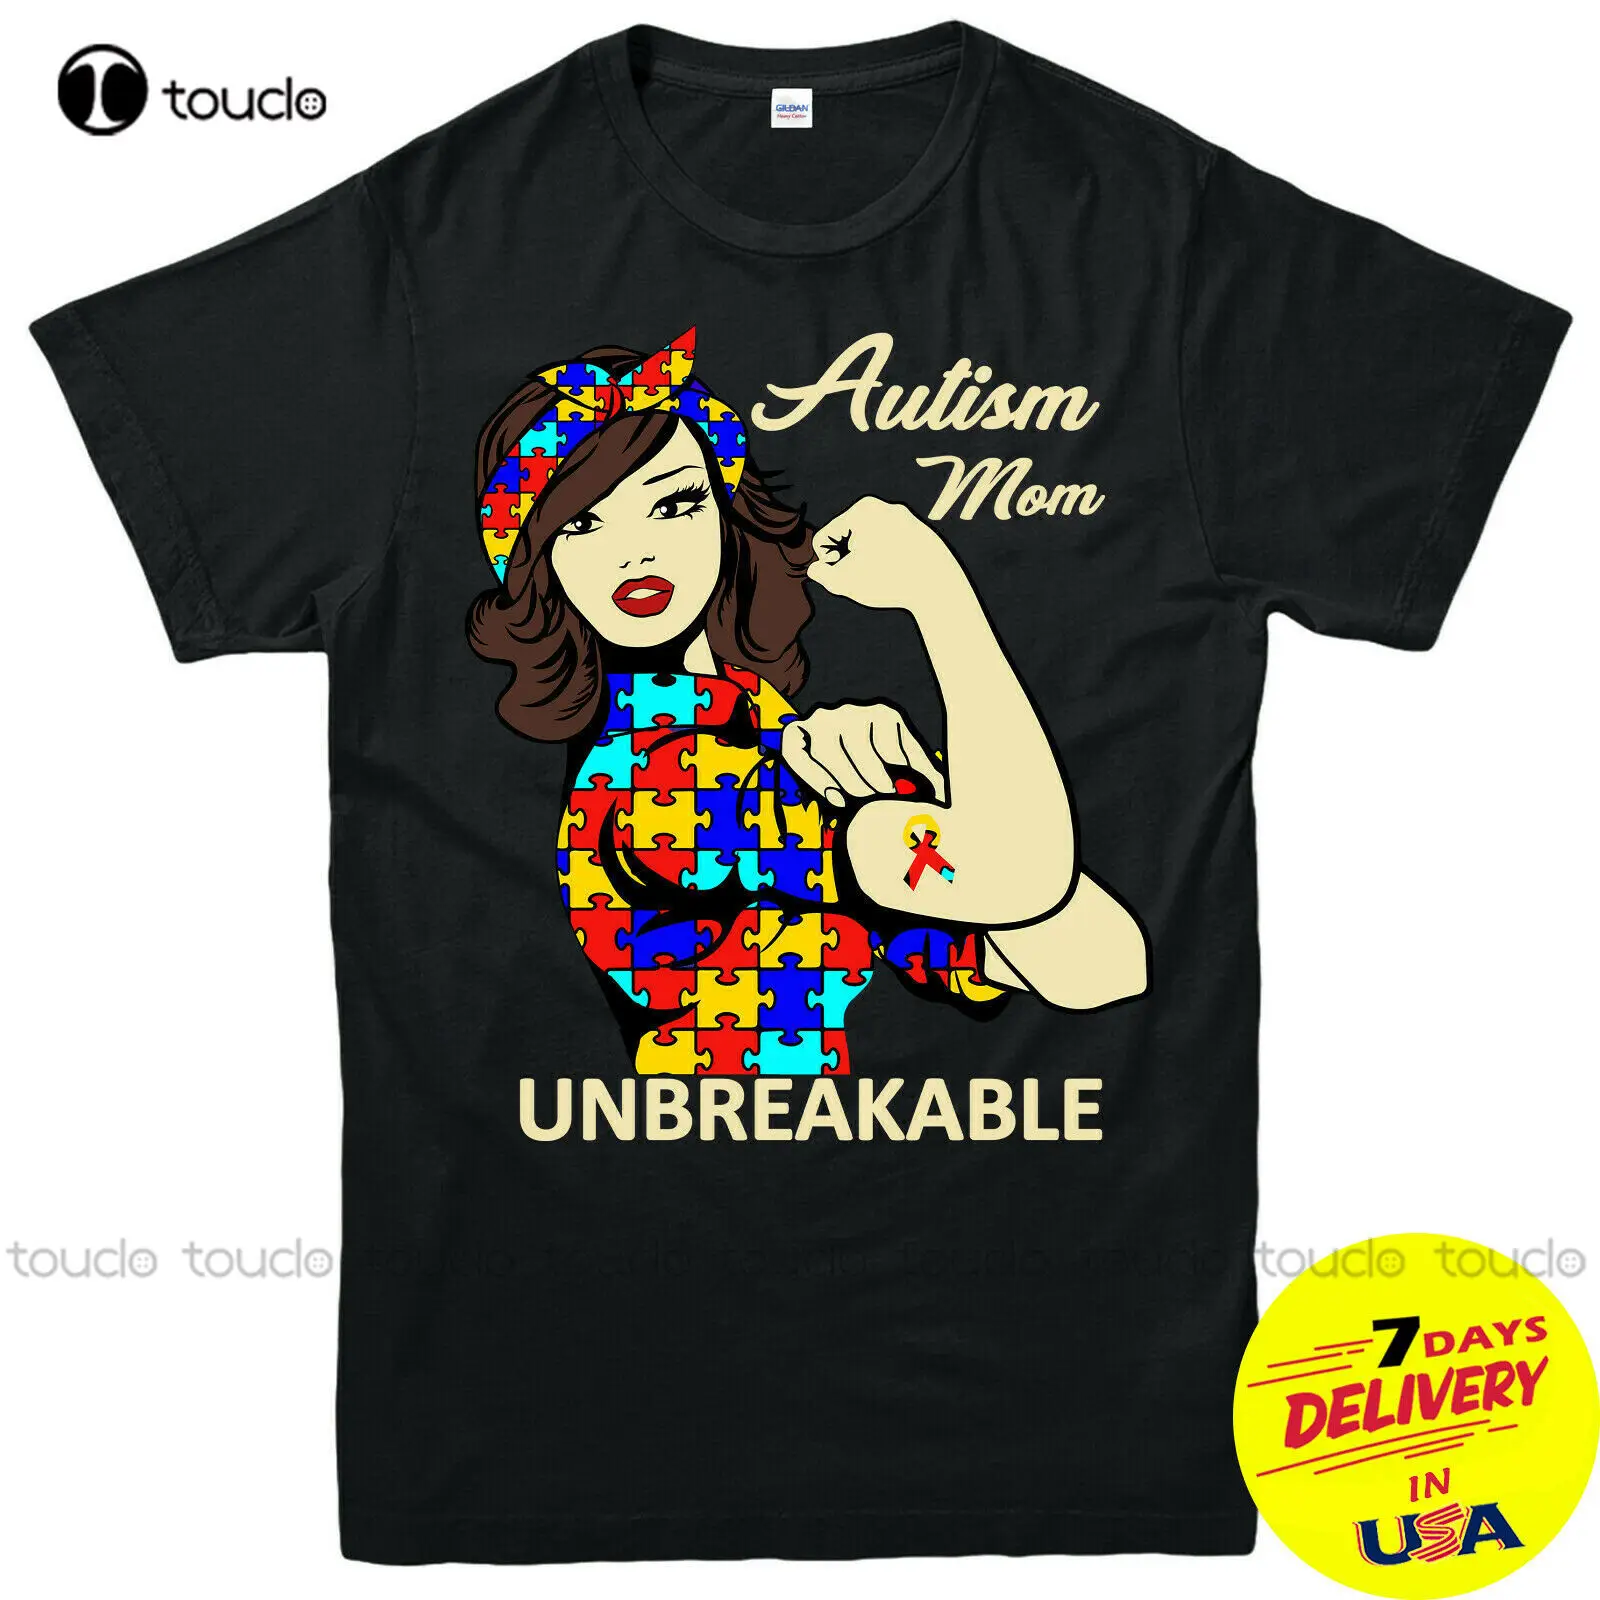 

Autism T-Shirt, Love, Heart, Mom, Unbreakable, Awareness, Fashion Short Sleeve Black T Shirt Cotton Casual Tee Shirt